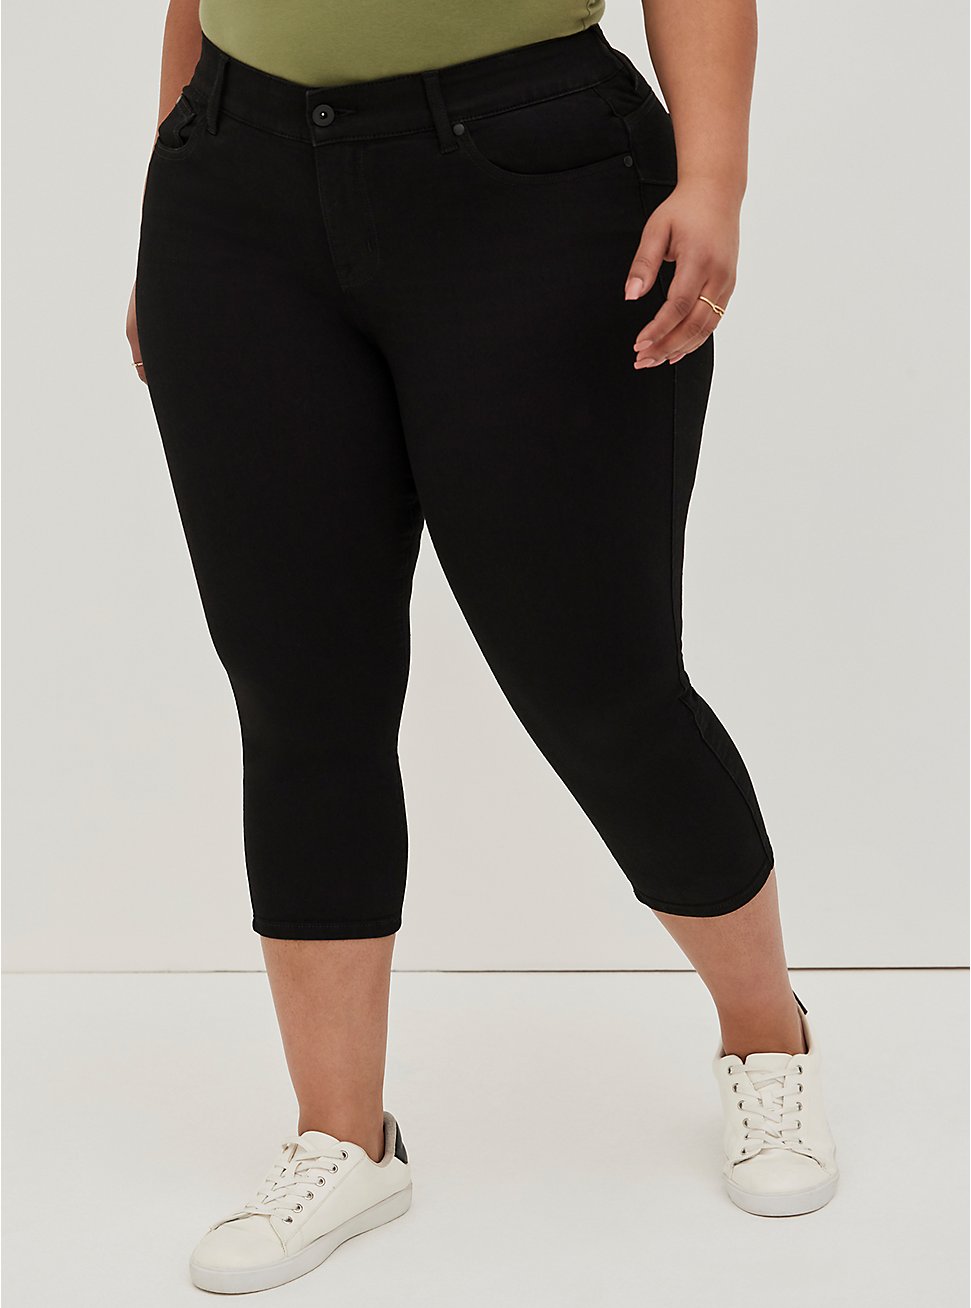 Plus Size Crop Bombshell Skinny Jean - Premium Stretch Black, DEEP BLACK, hi-res